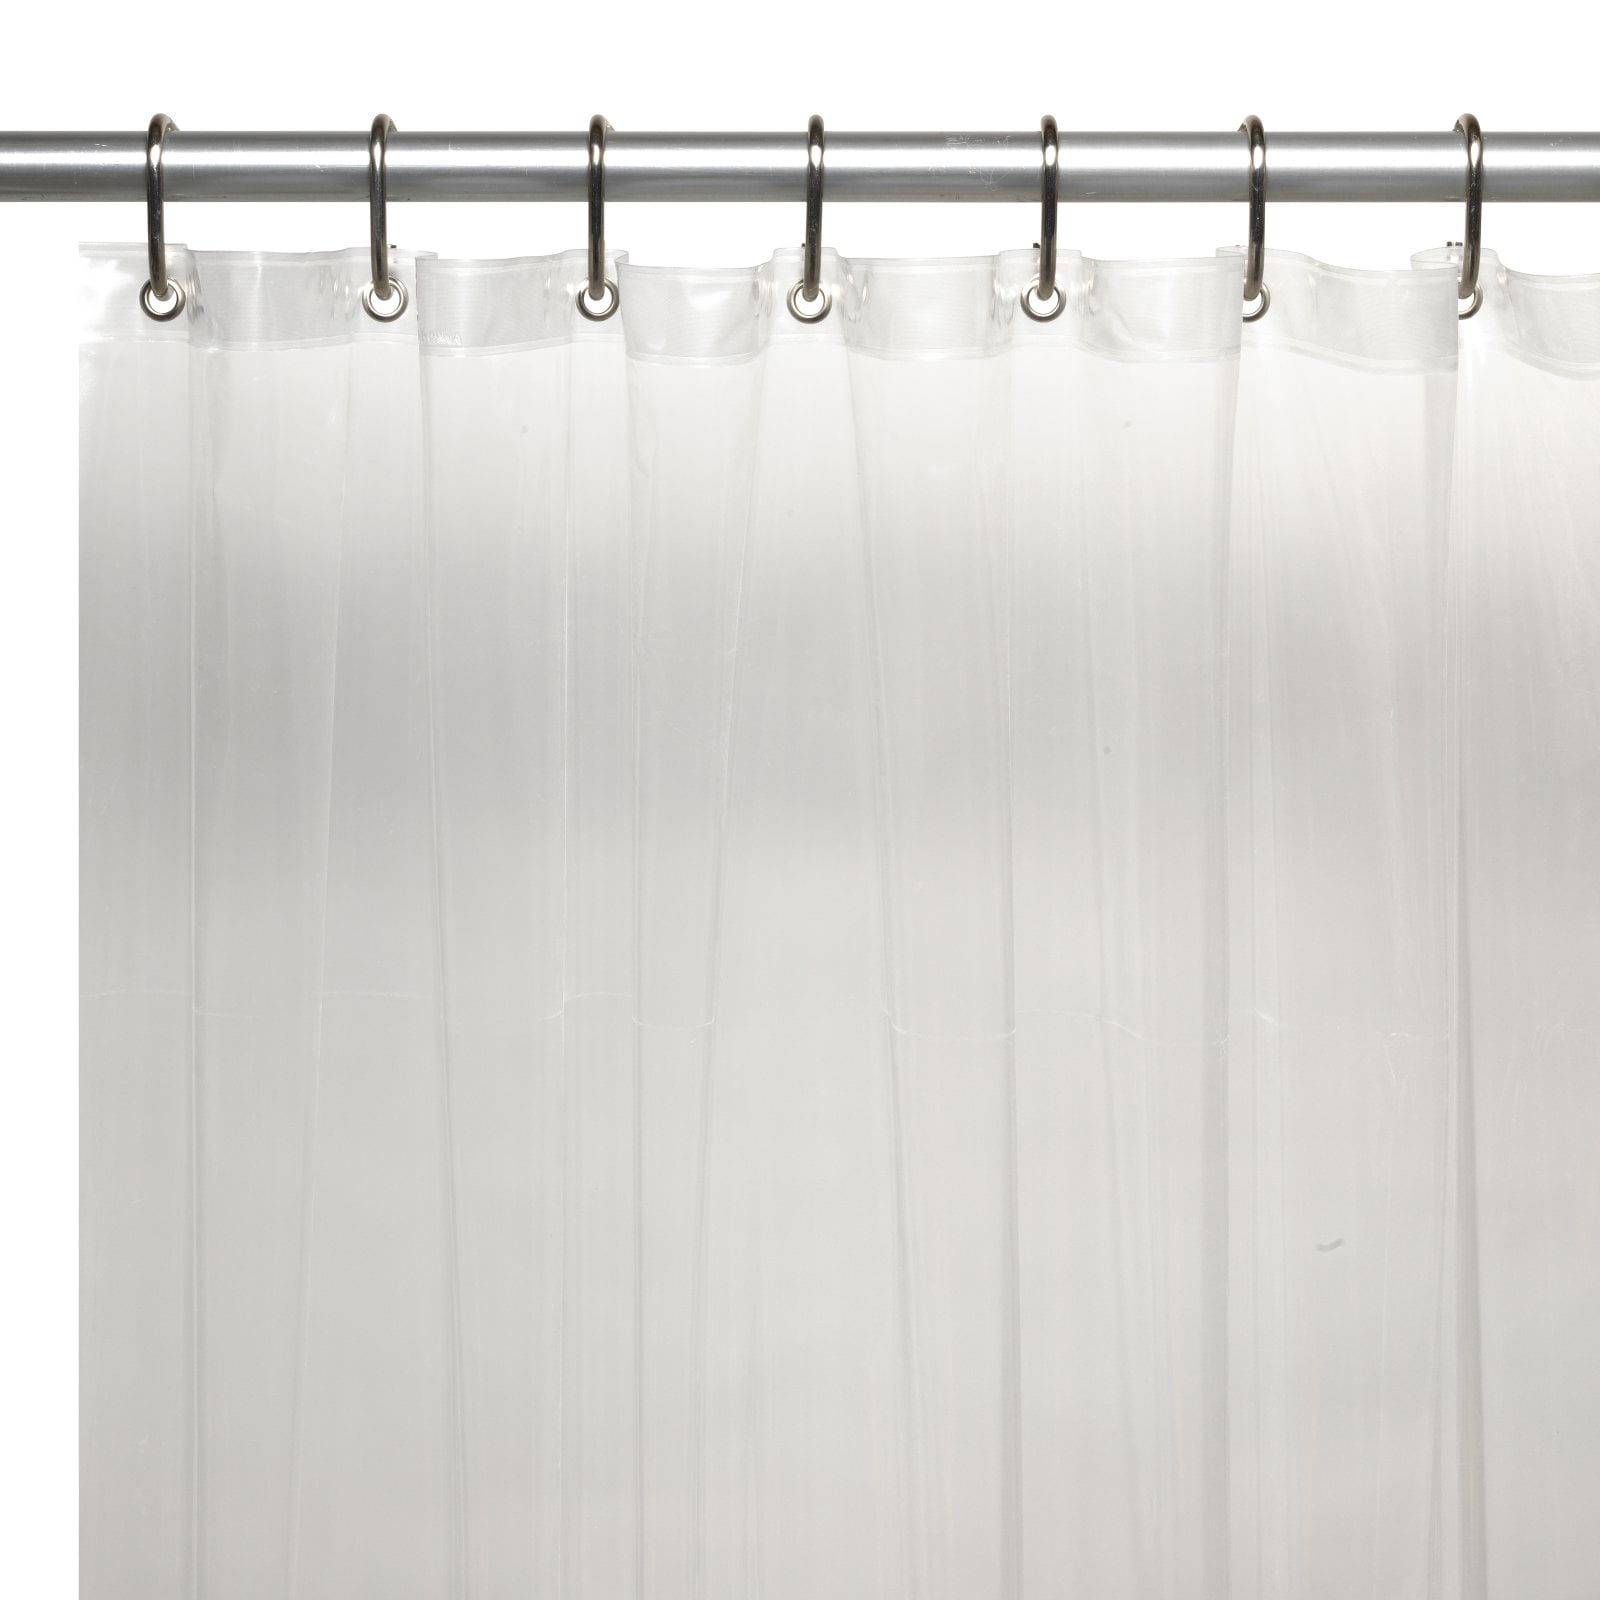 Shower Stall Sized 54 X 78 Mildew Resistant 10 Gauge Vinyl Curtain Liner W Metal Grommets And Reinforced Mesh Header In Bone Com